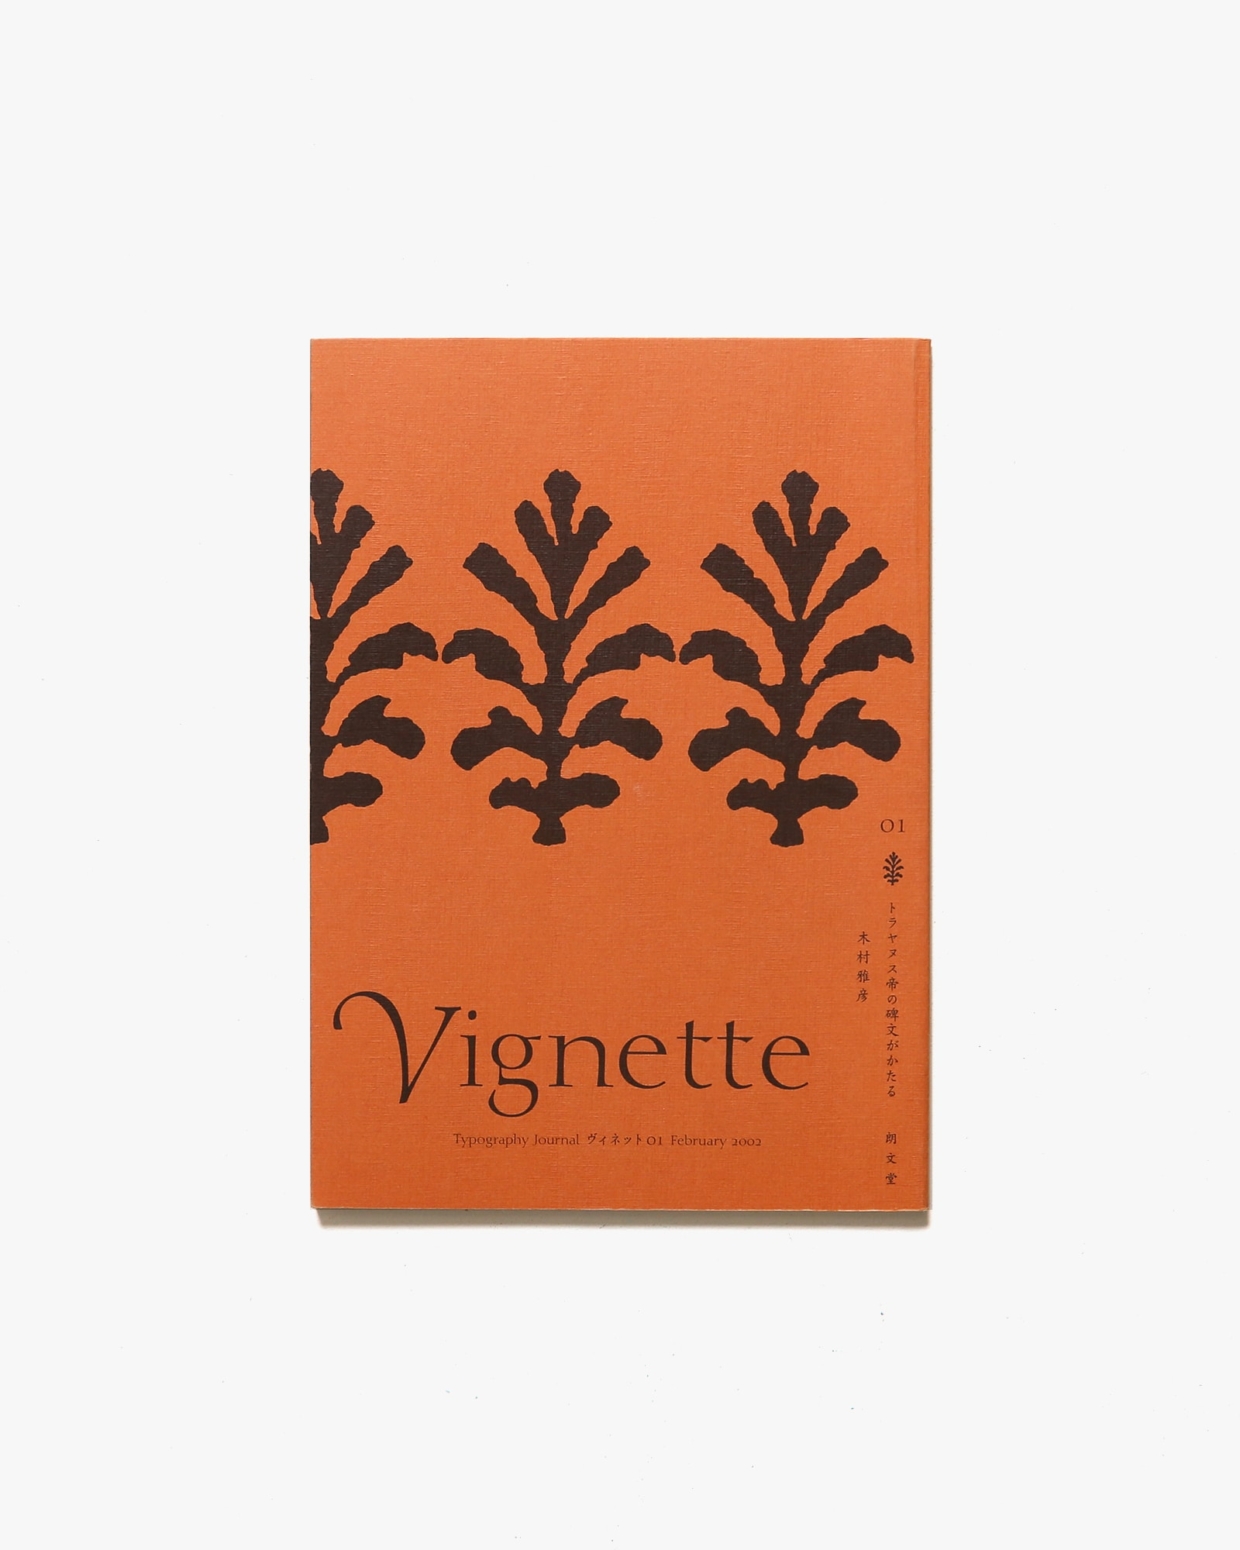 Vignette Typography Journal ヴィネット 01 トラヤヌス帝の碑文がかたる | 木村雅彦